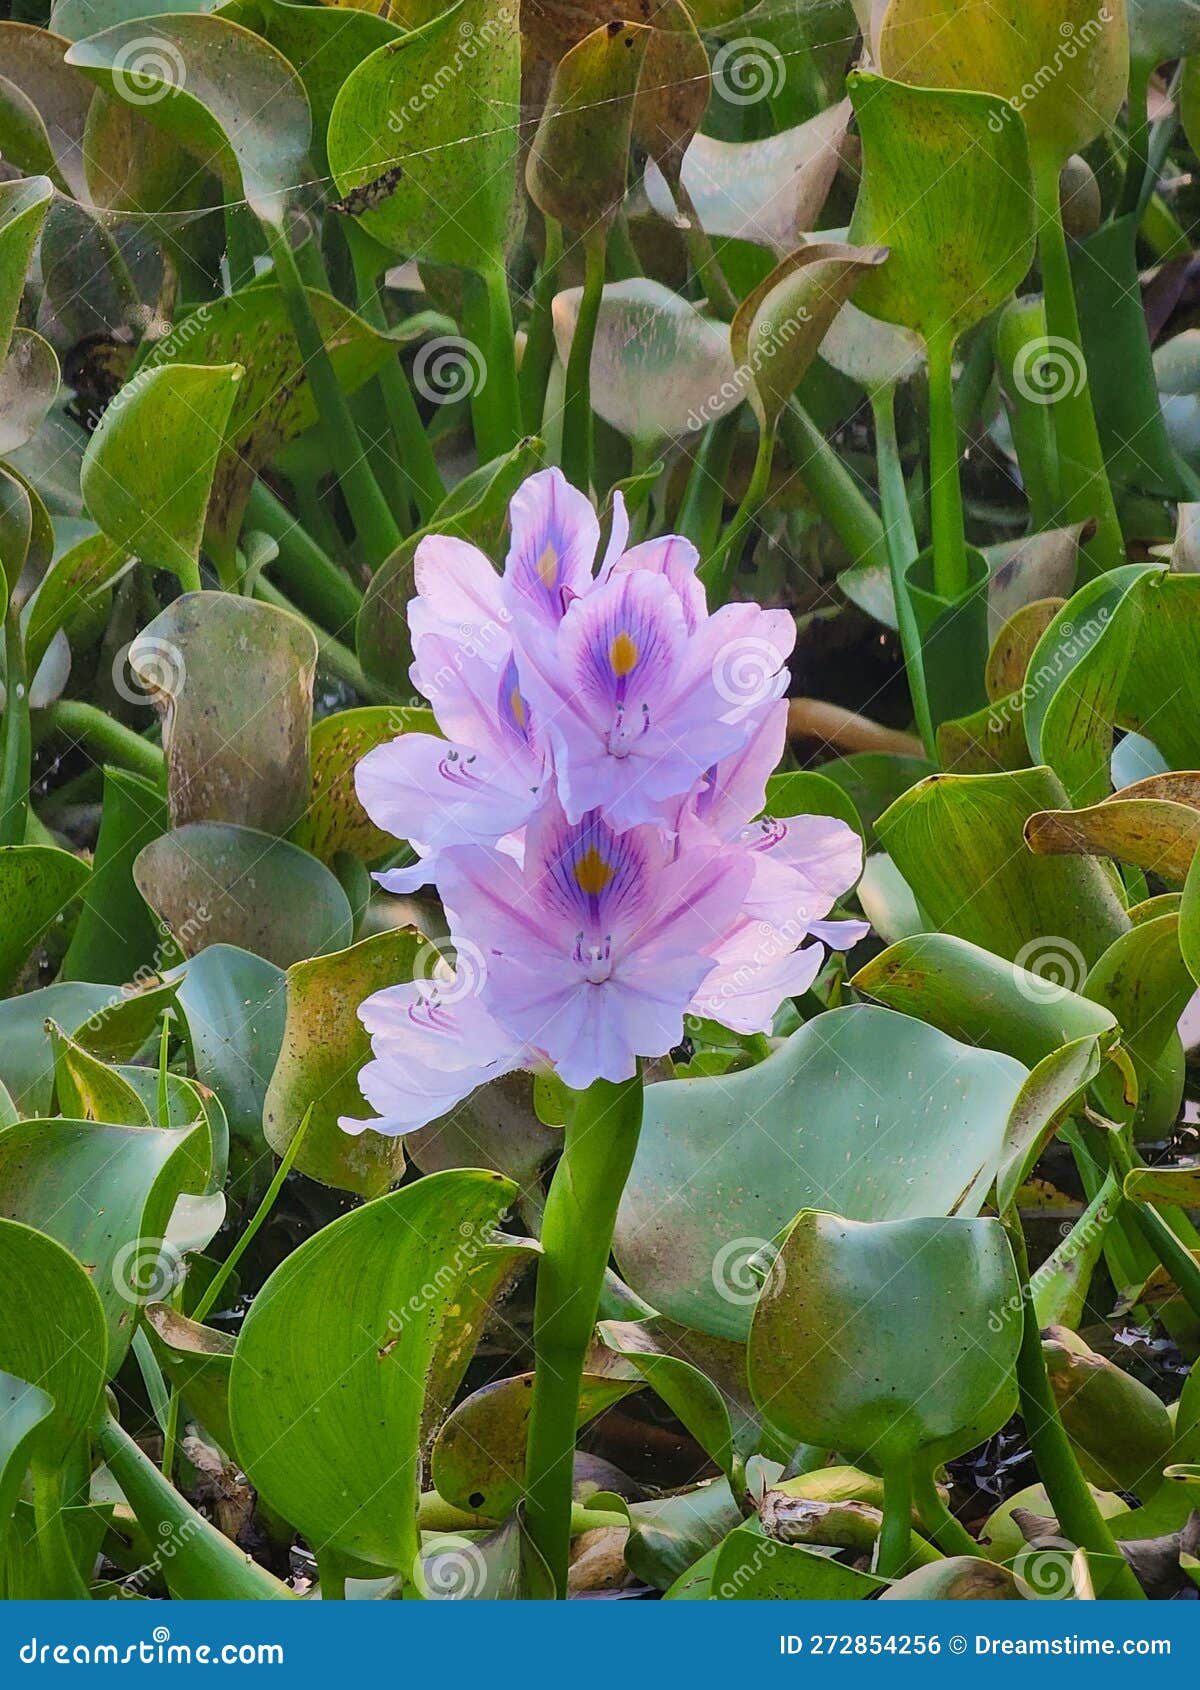 closeup of the gentle lilac eyhorniya or (eichornia crassipes) in the garden